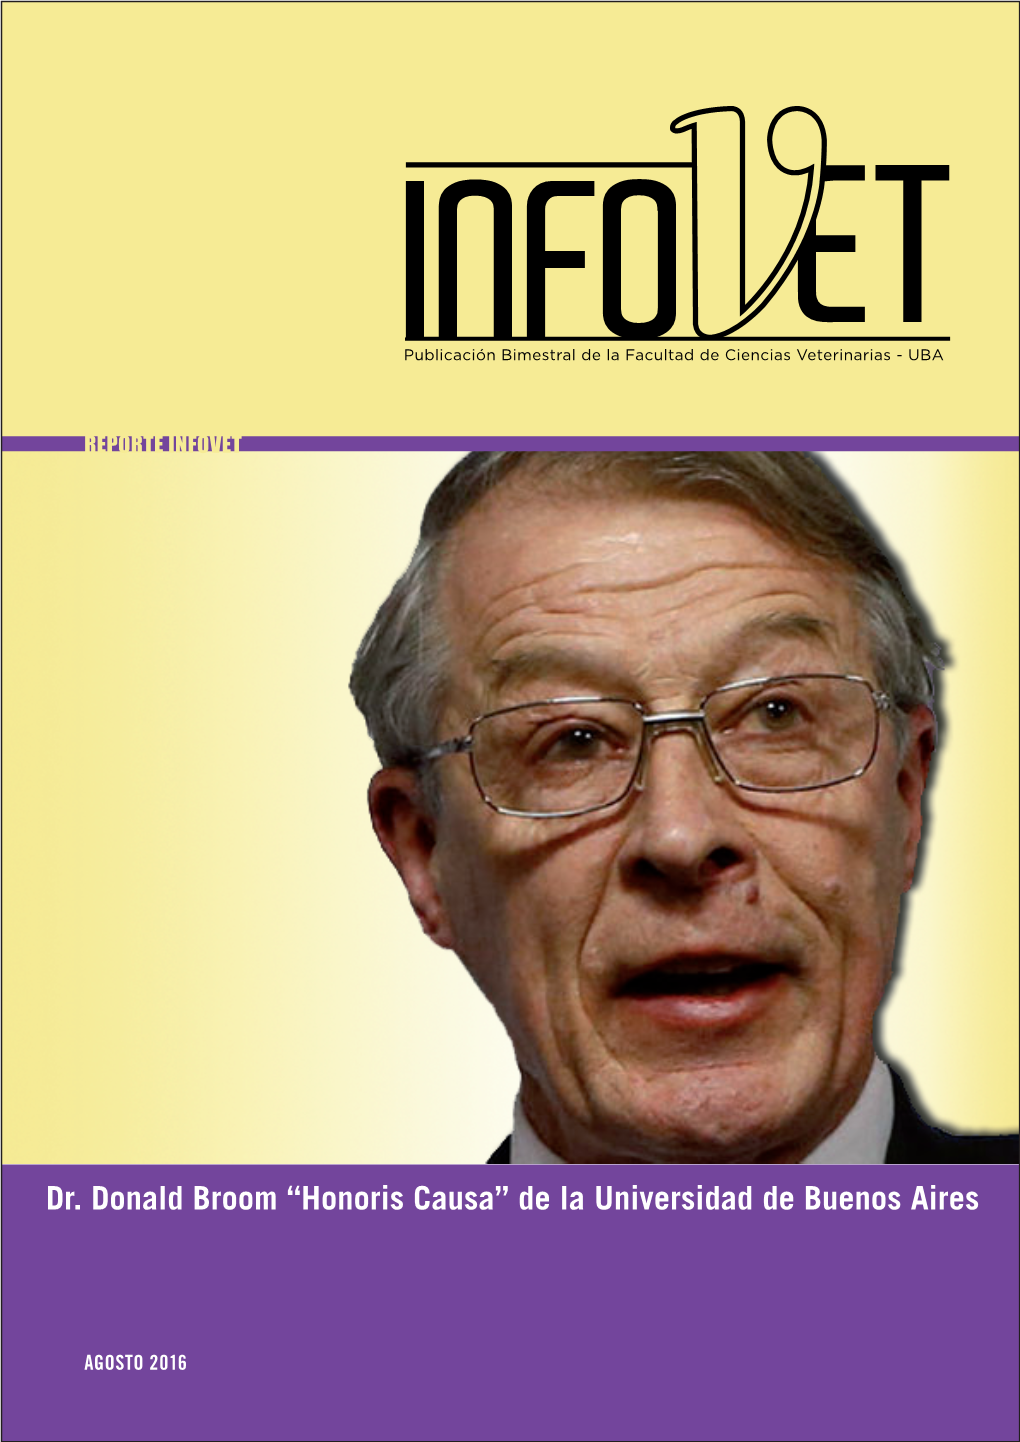 Dr. Donald Broom “Honoris Causa” De La Universidad De Buenos Aires